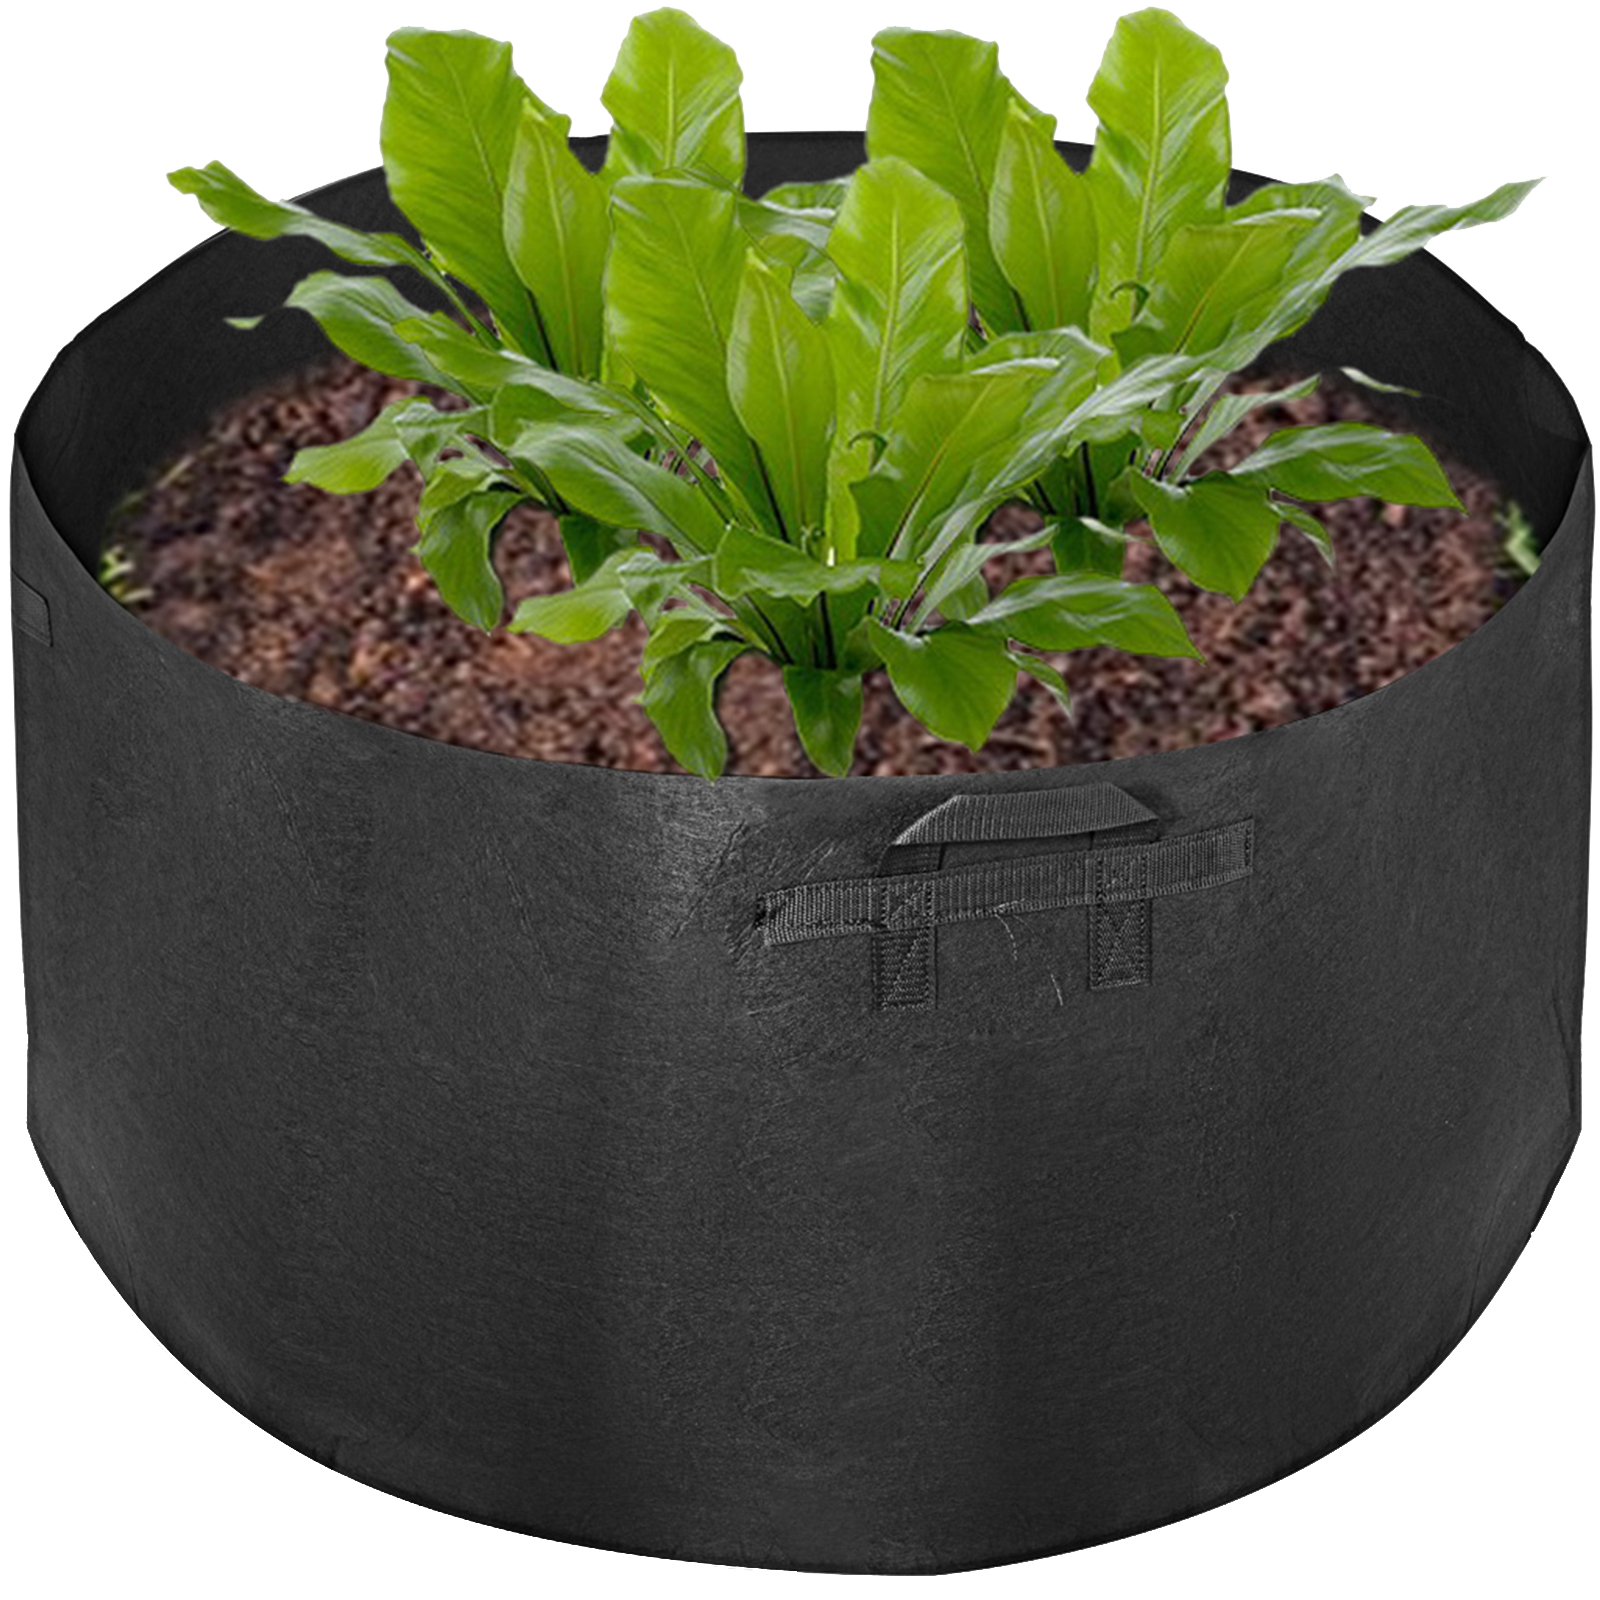 Square Fabric plant Grow Bag Pot Bags Garden Planting Bags Handles for Veg